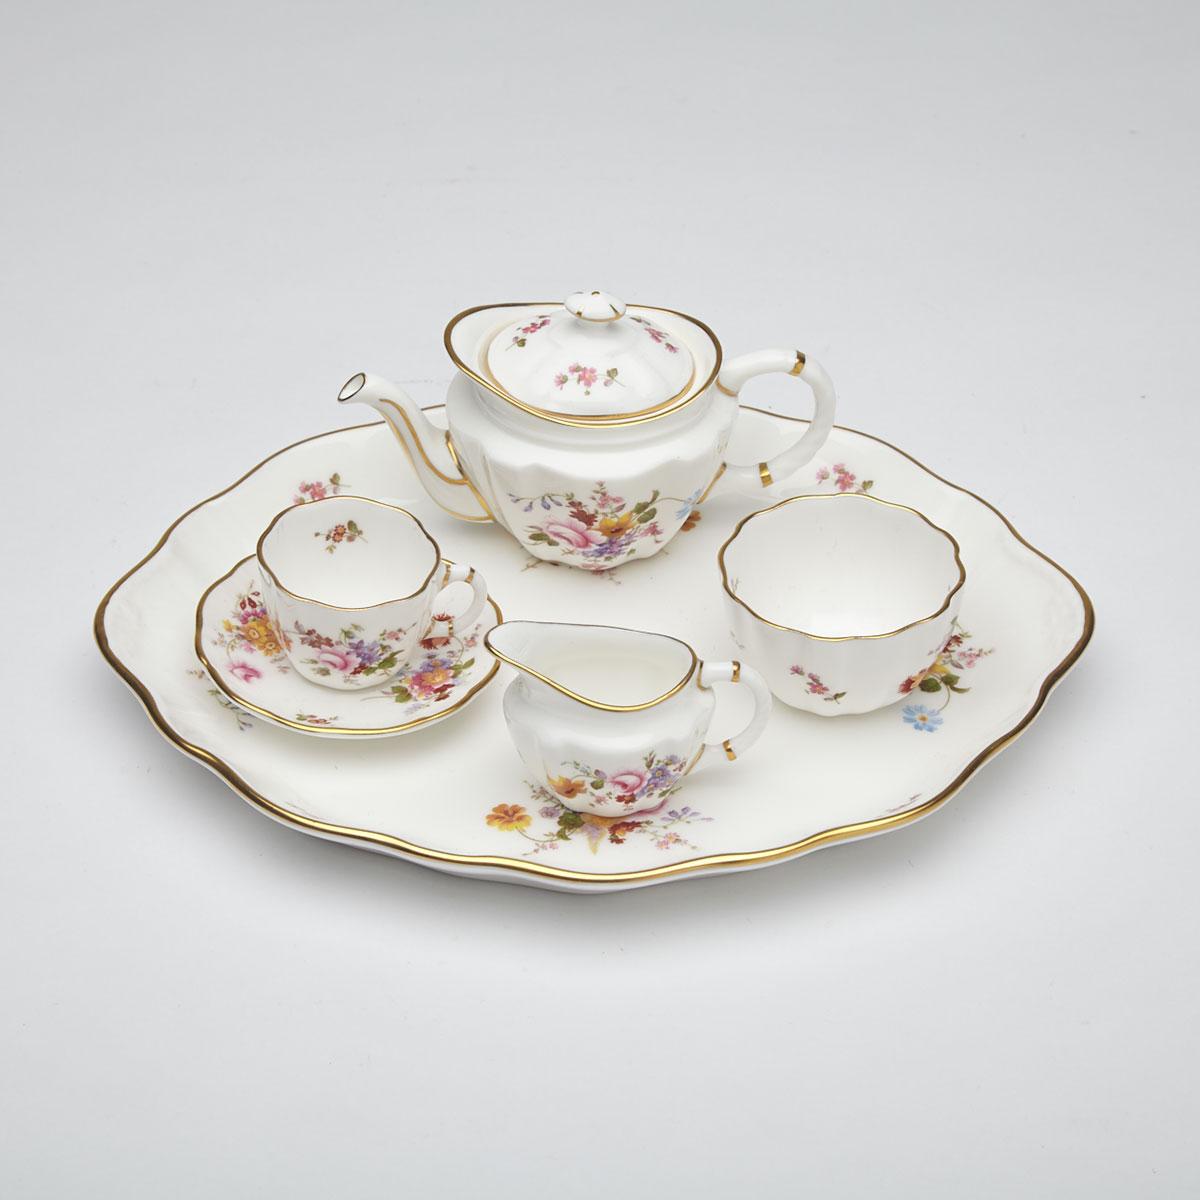 Royal Crown Derby ‘Posies’ Pattern Miniature Tea Service, 20th century